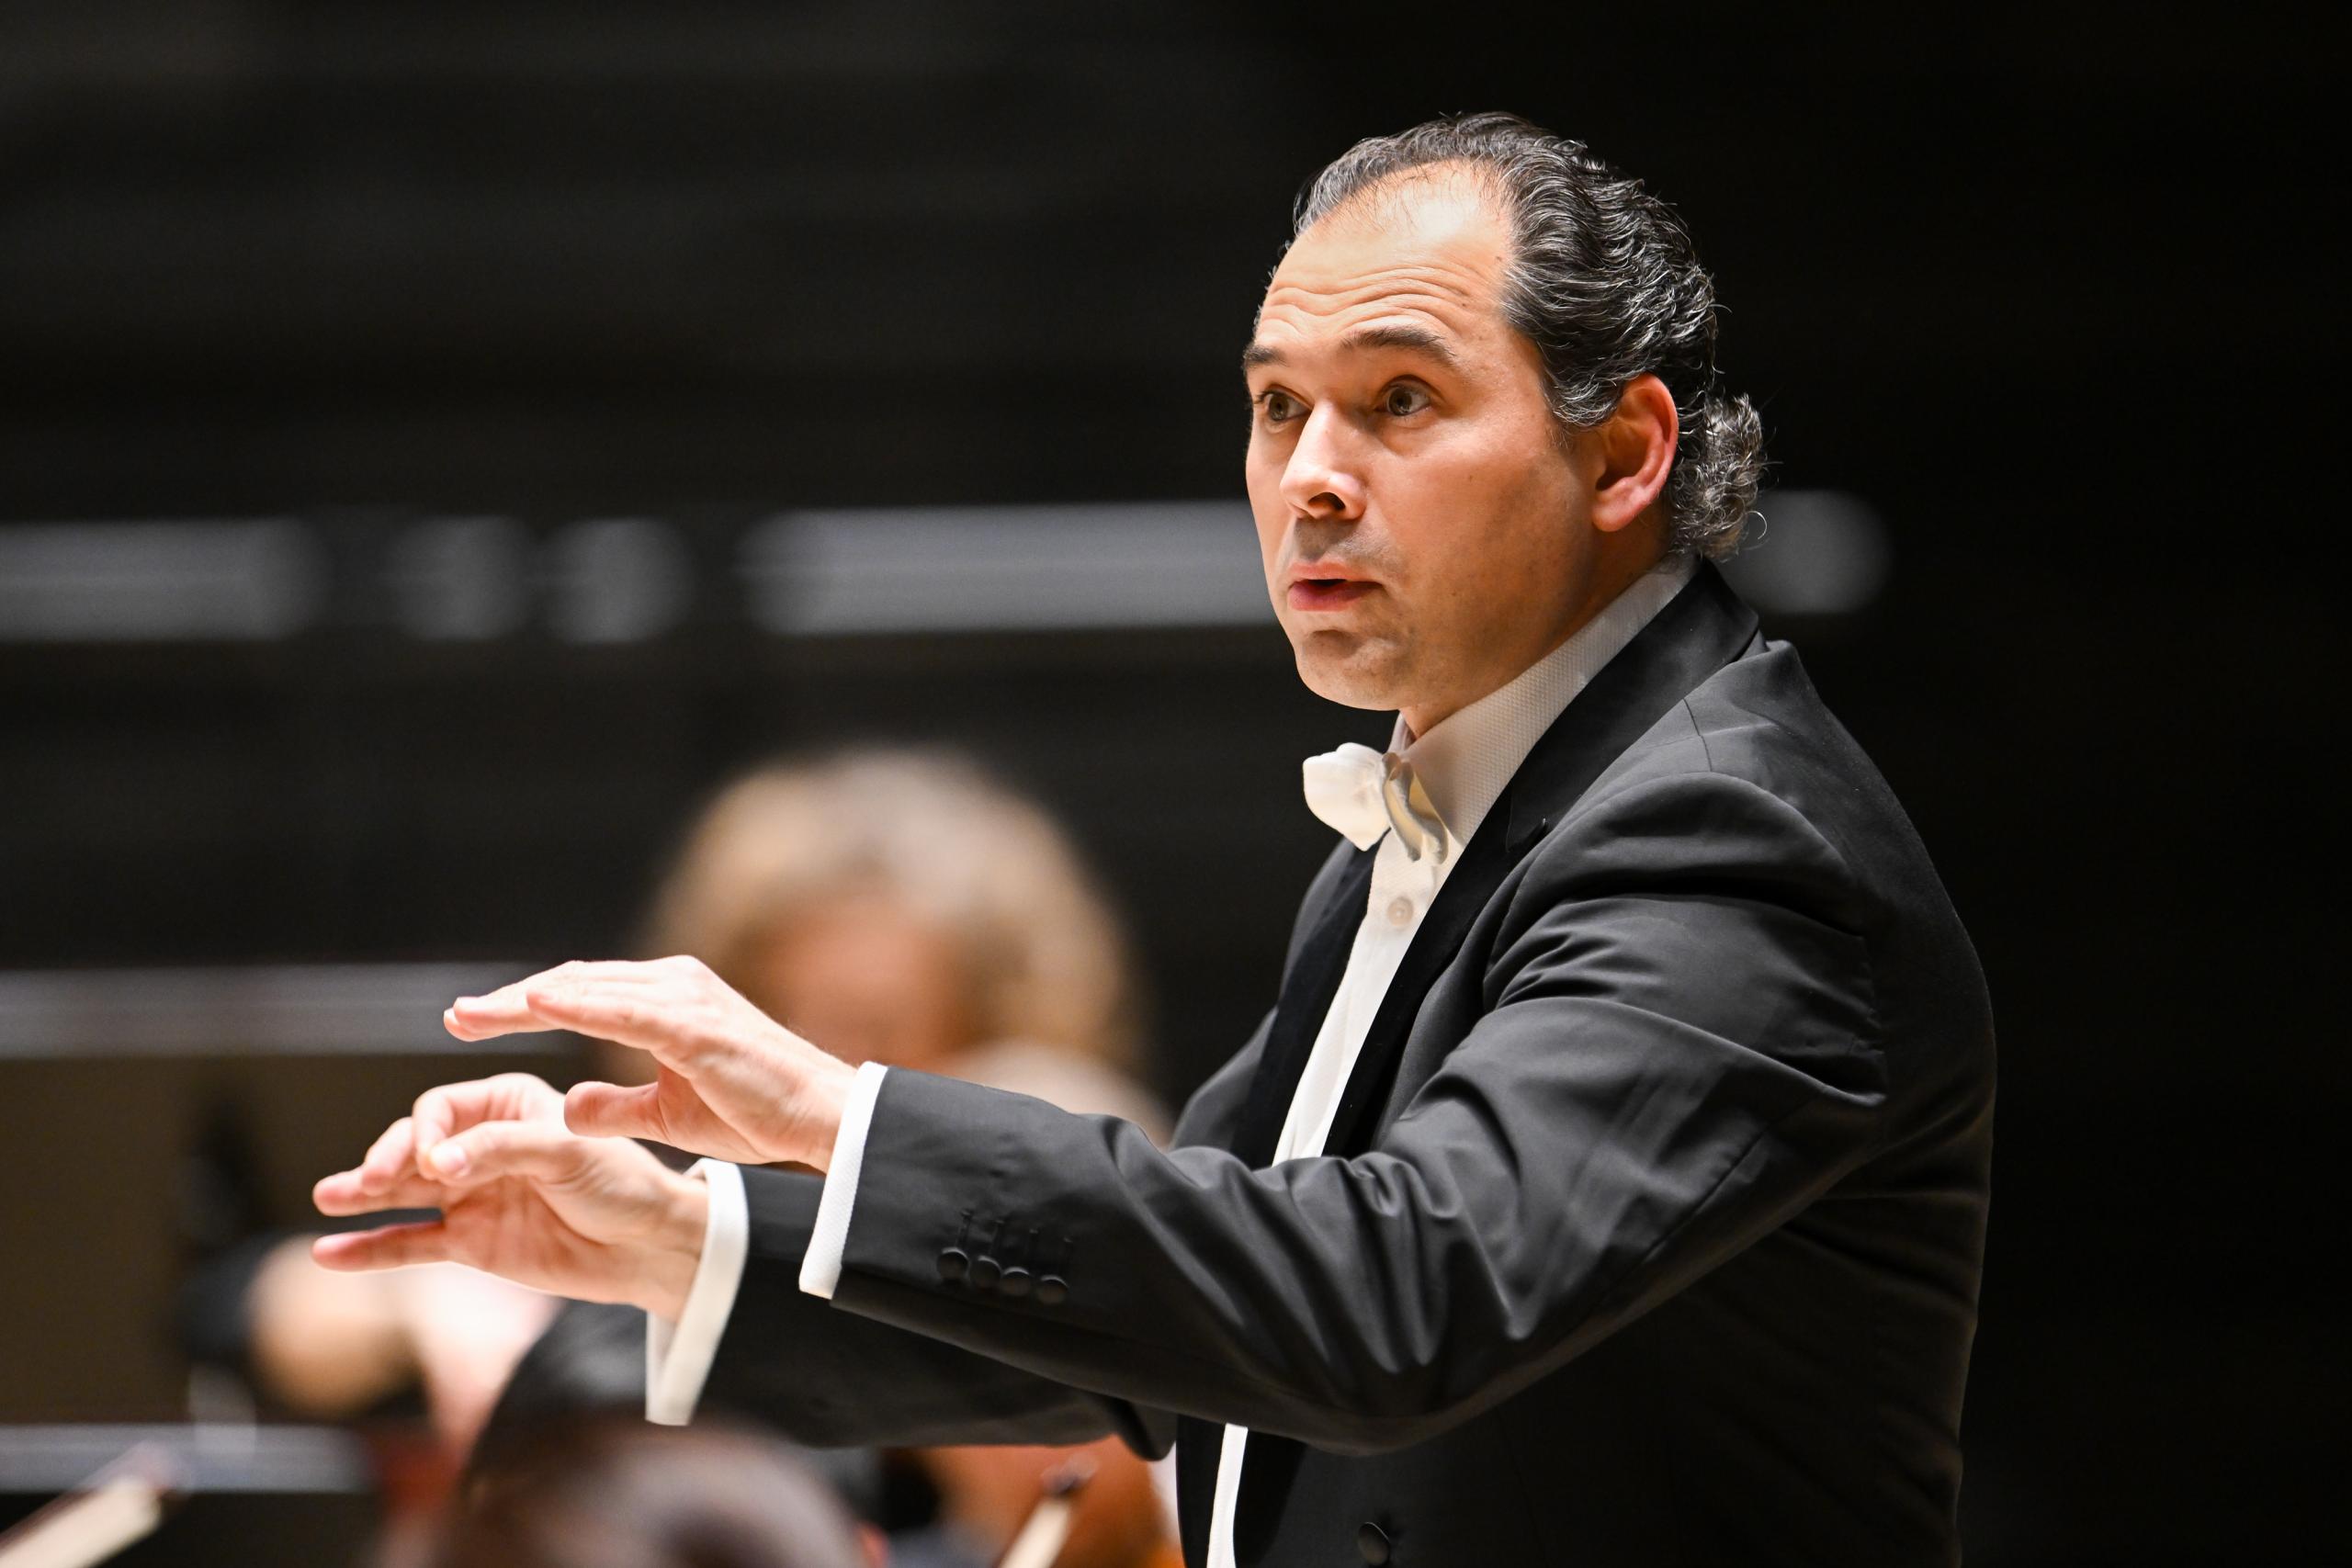 Conductor Tugan Sokhiev raised his arms while conducting